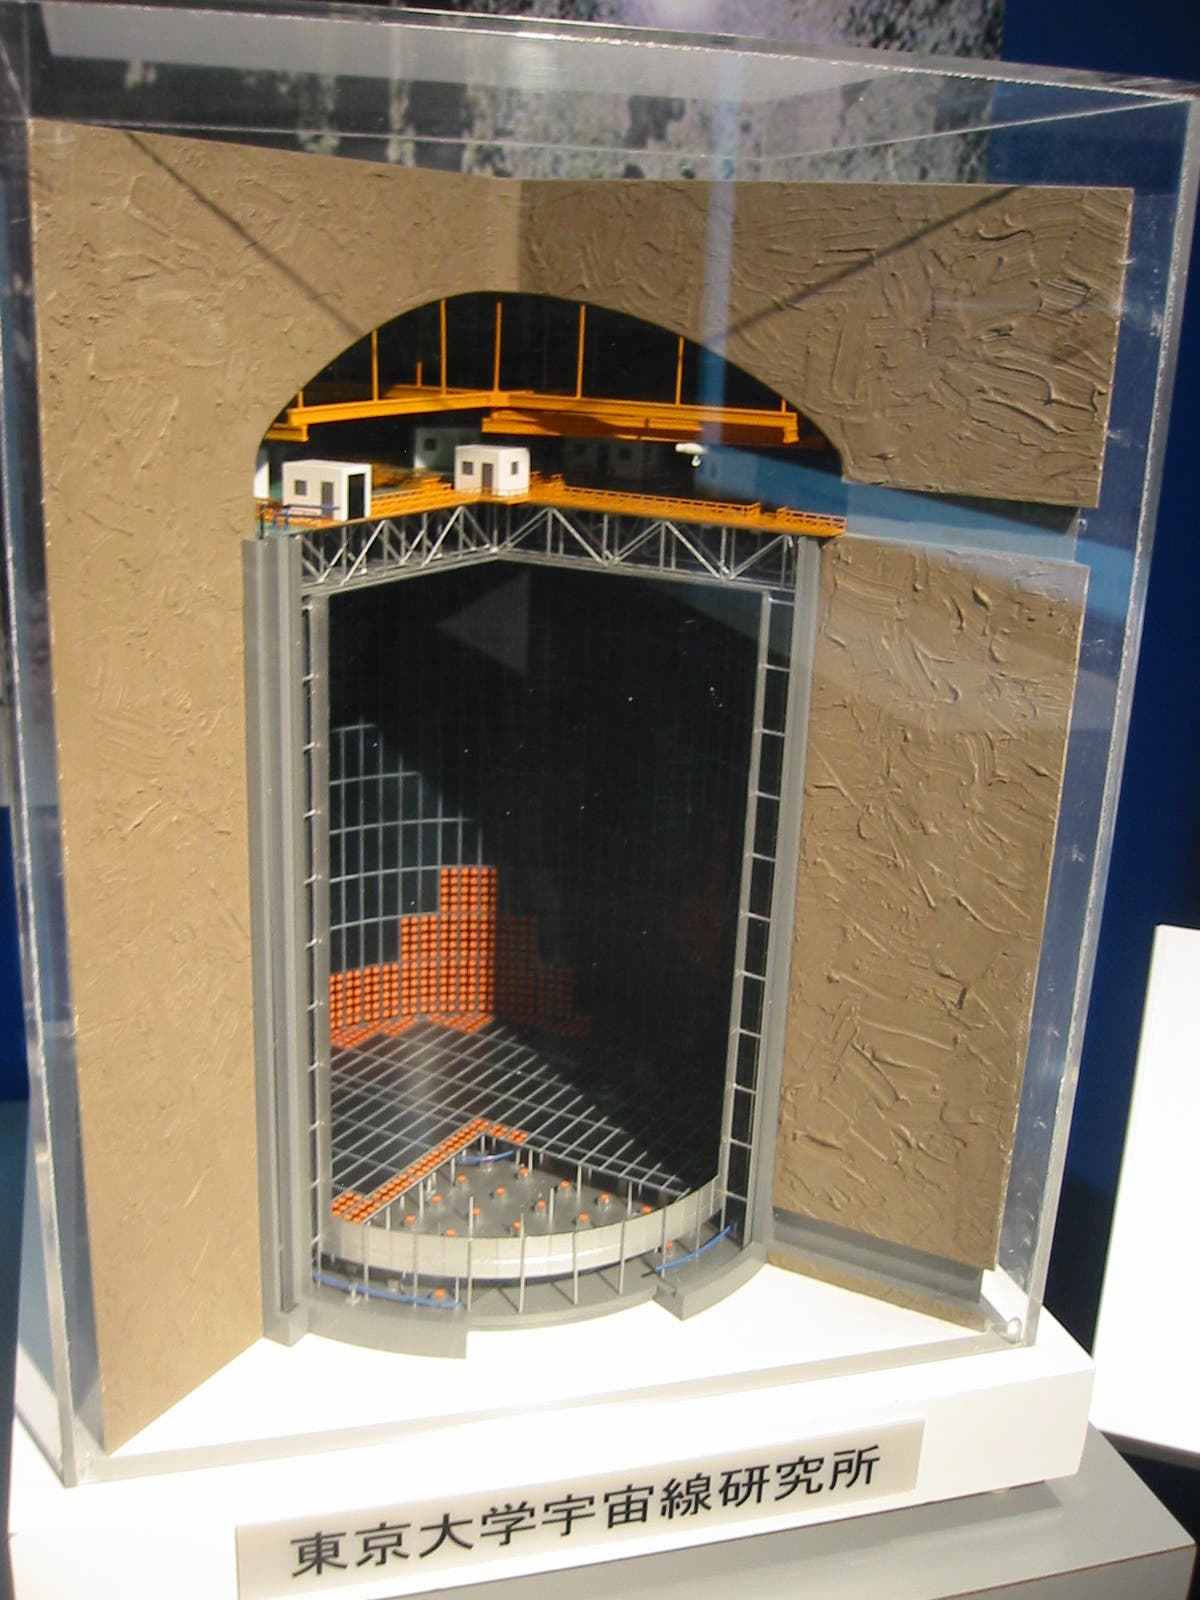 Modell des Kamiokande-Neutrinodetektors